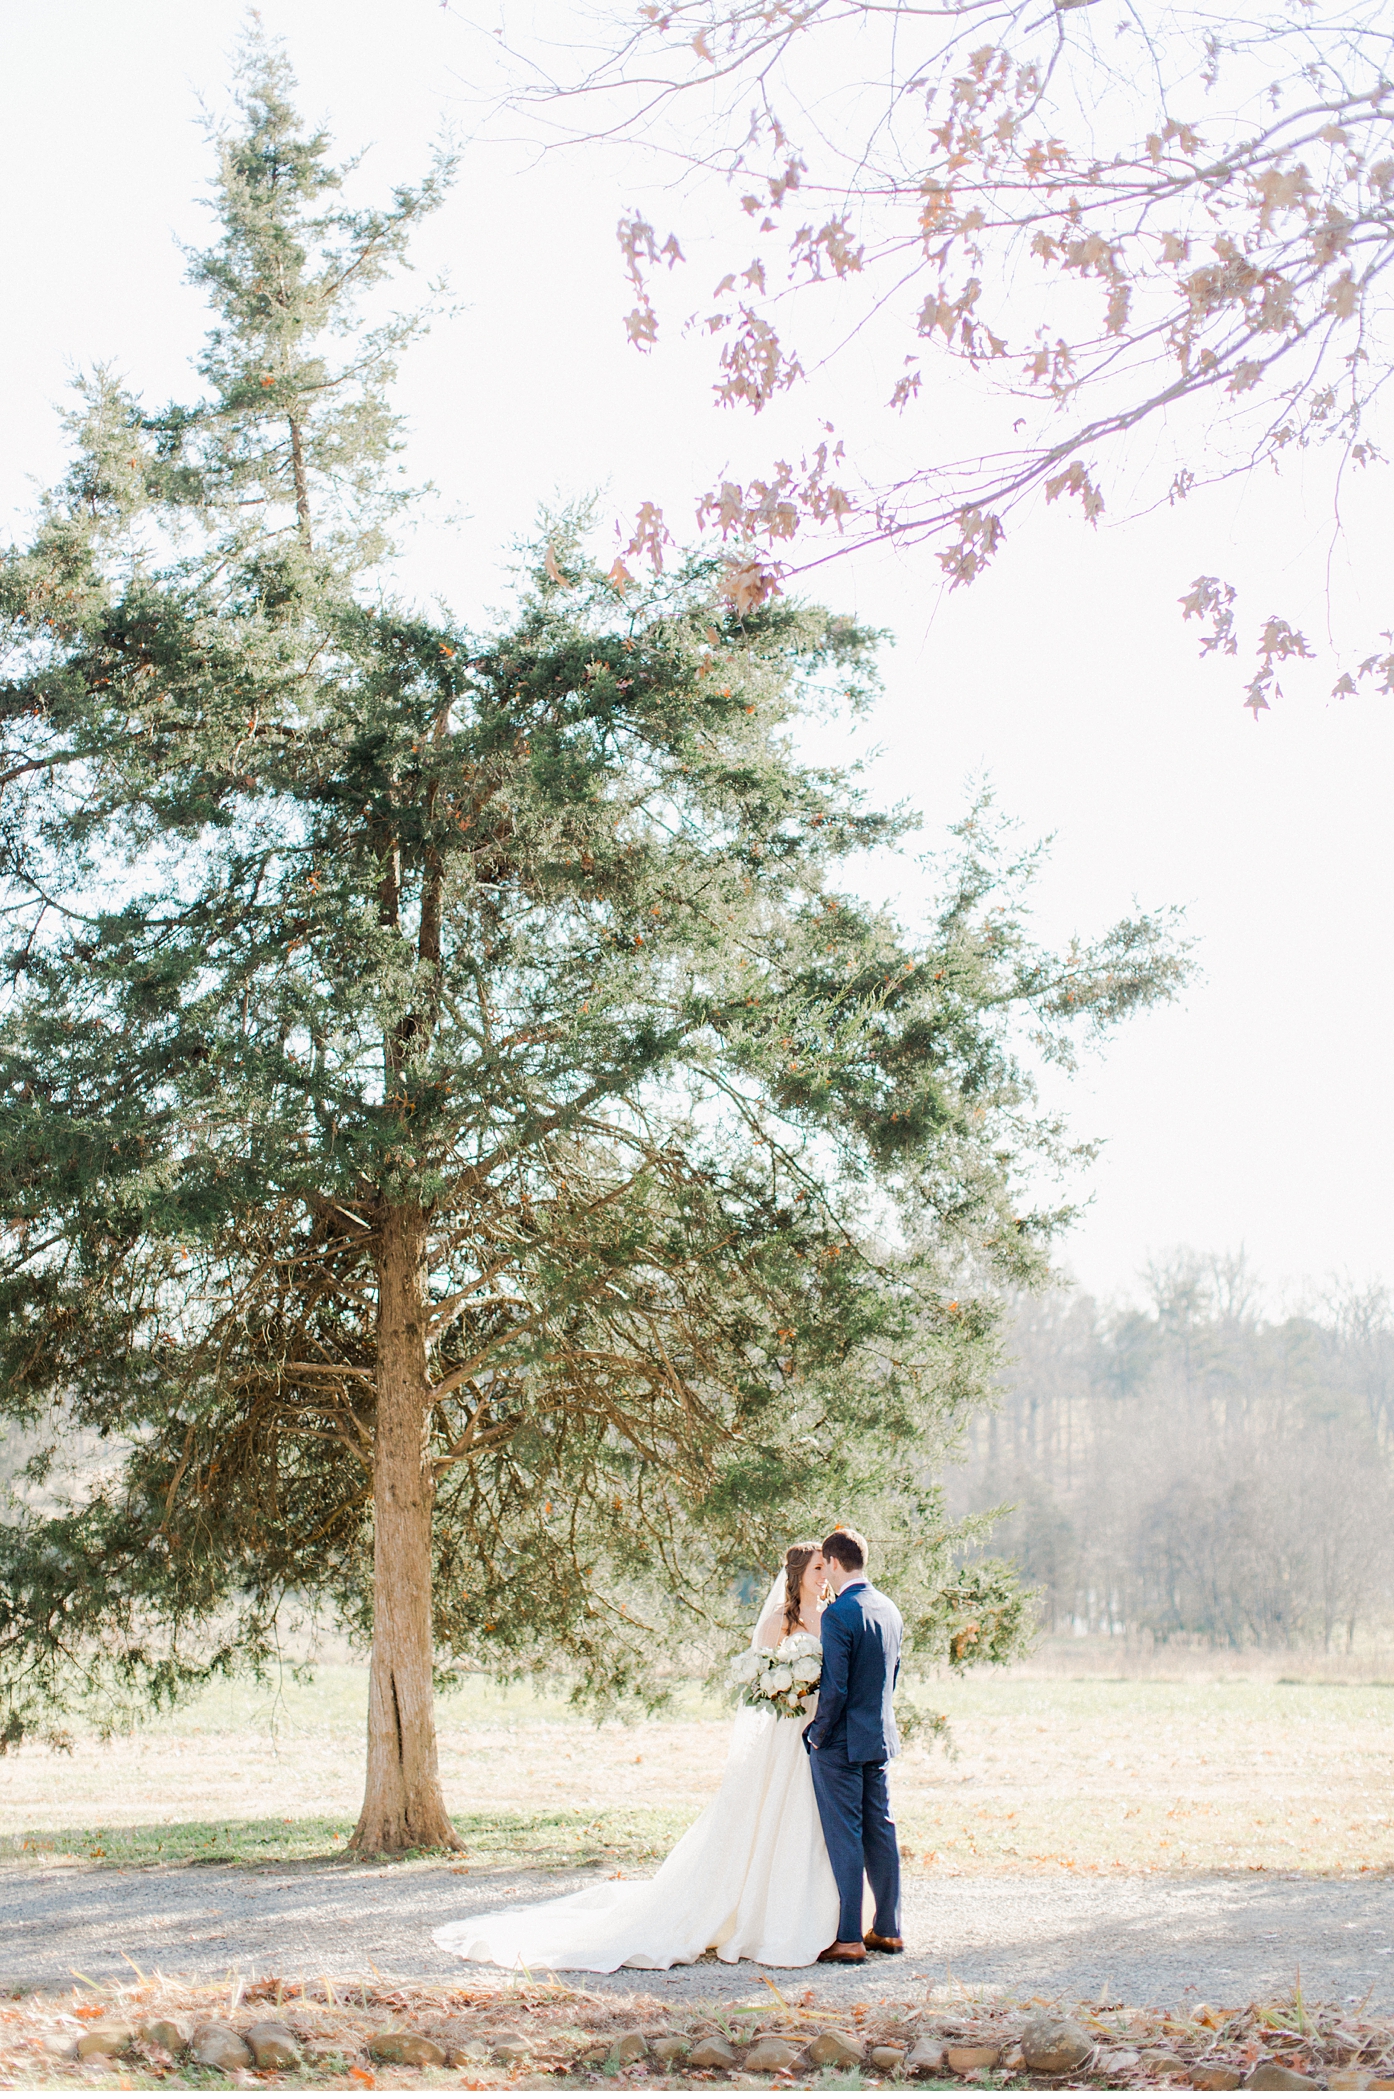 Greensboro NC Wedding at Summerfield Farms by Alisandra Photography